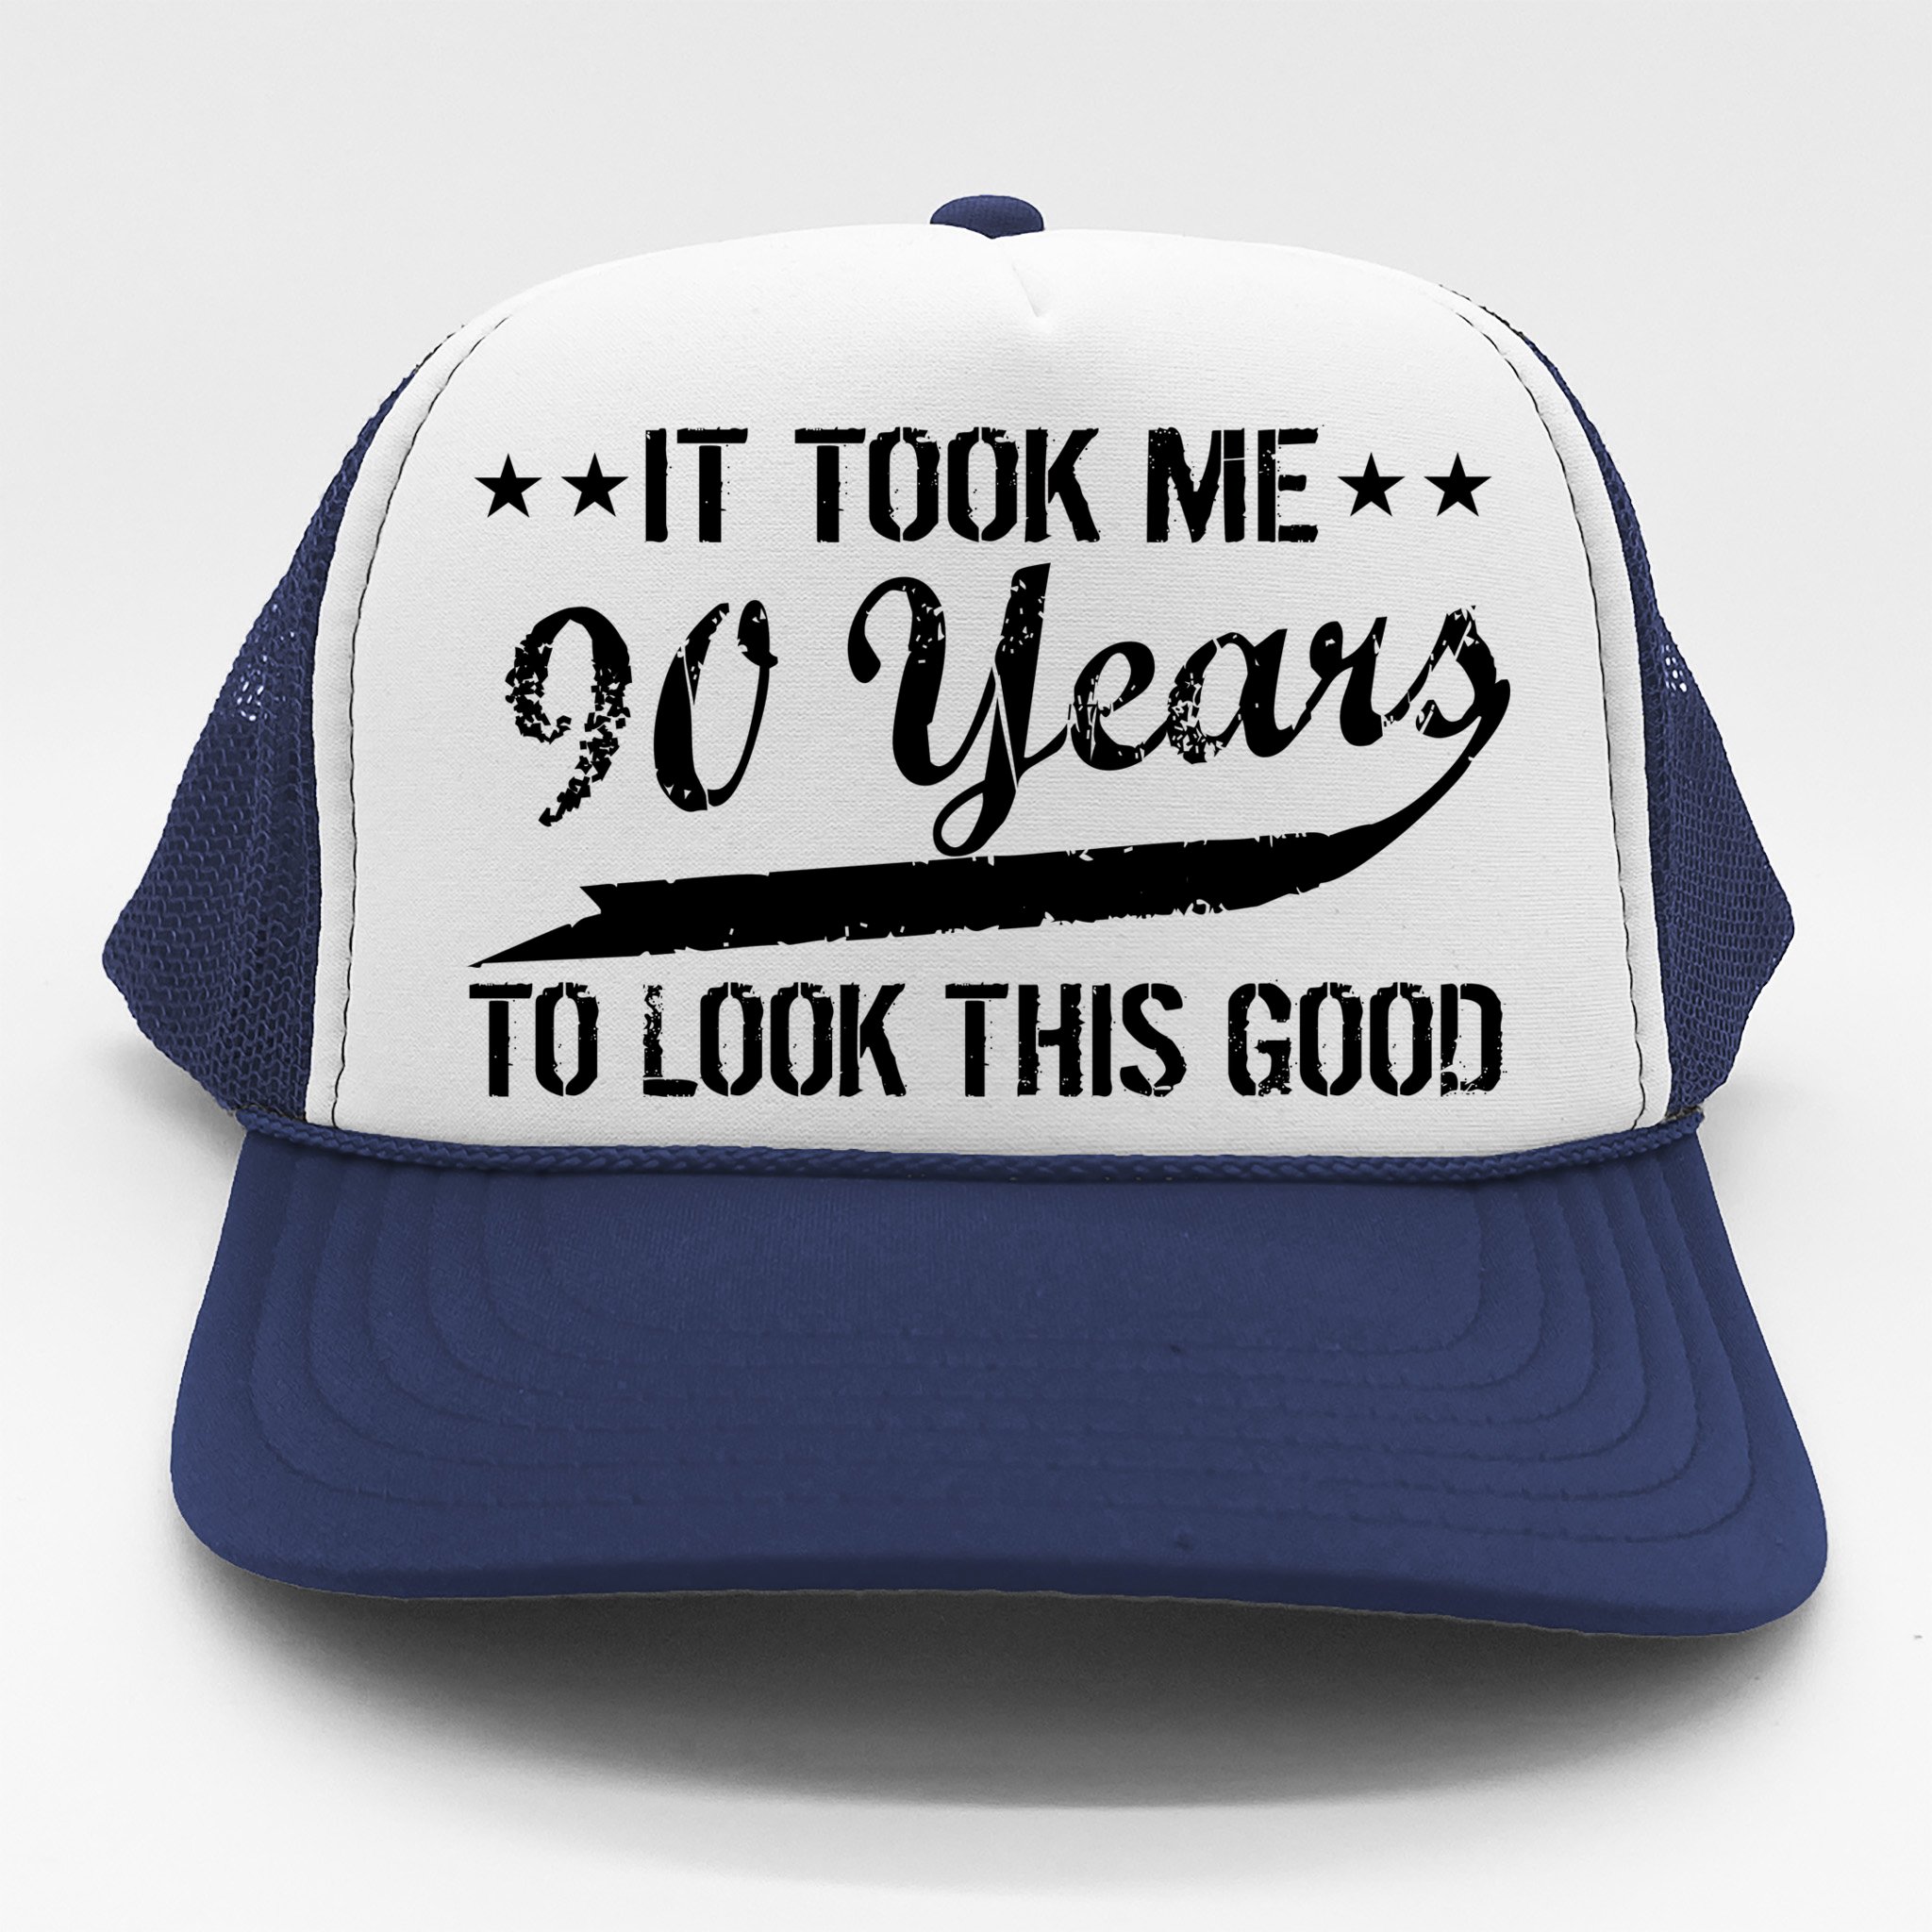 I Love 80'S Music Funny Adjustable Trucker Hat Cap 